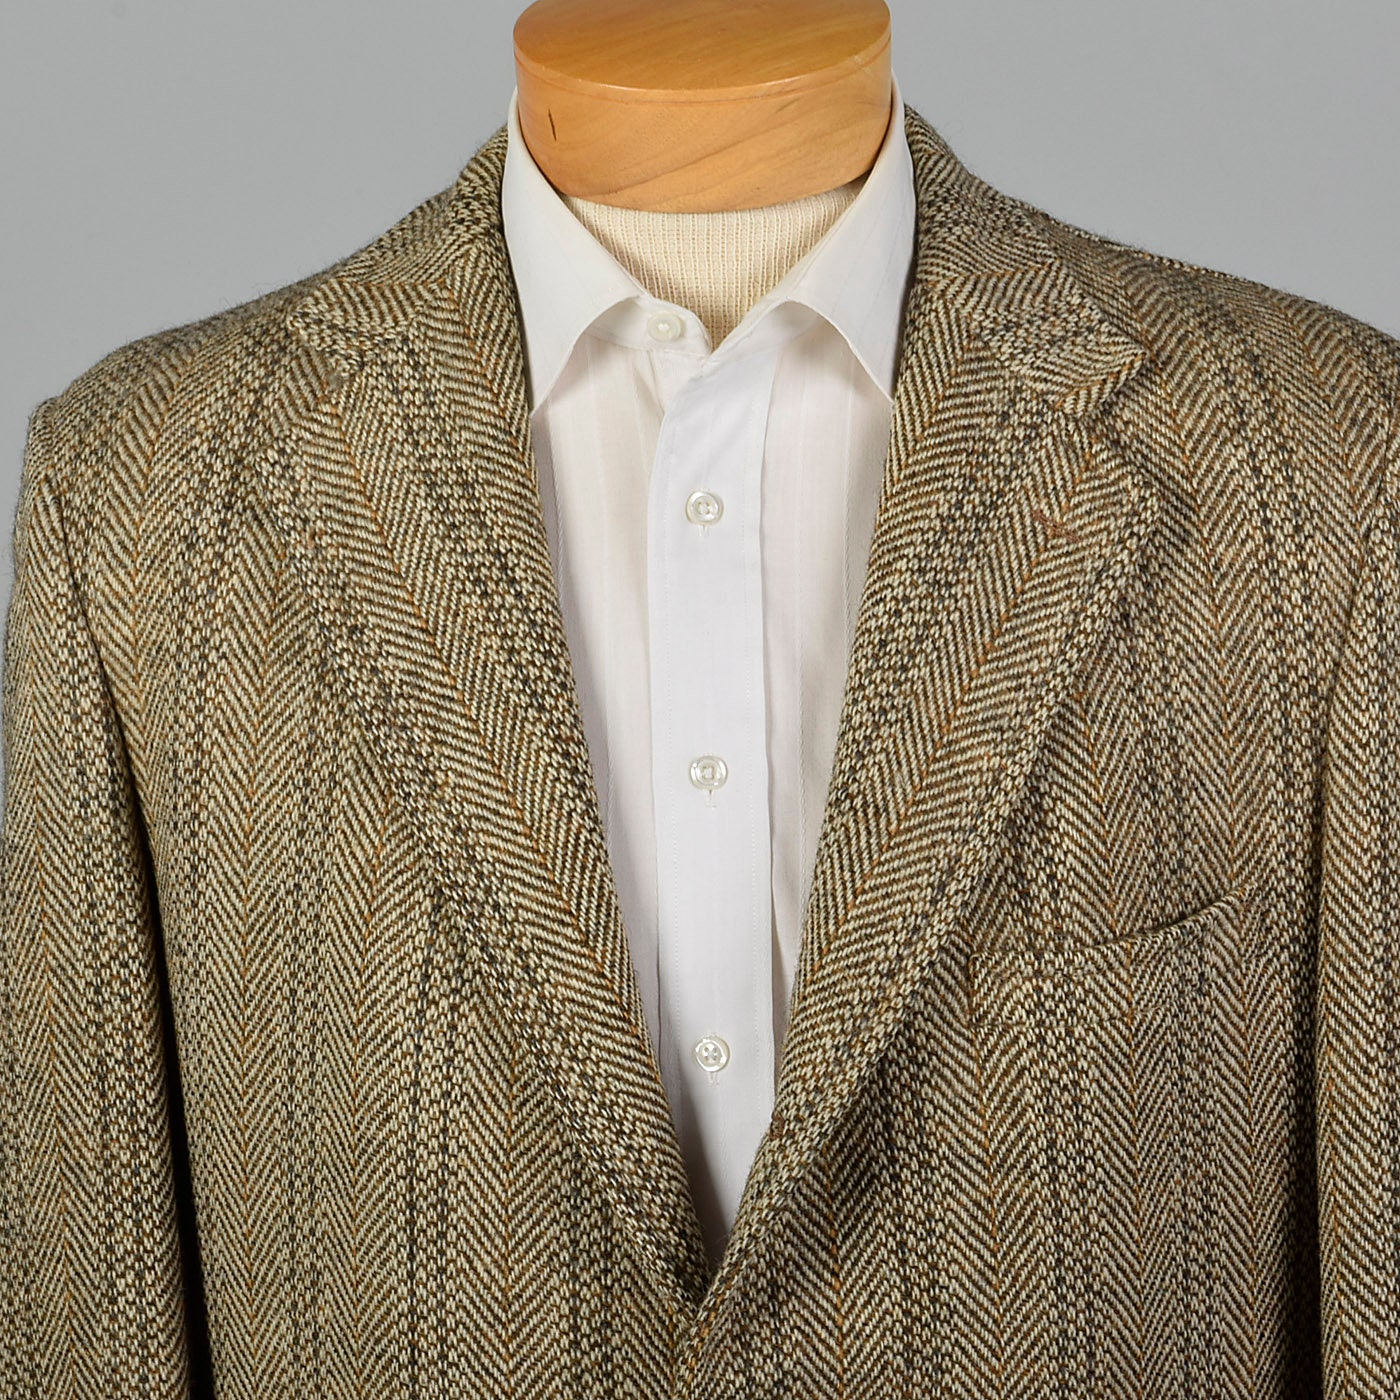 Large 41R 1970s Mens Harris Tweed Tan Jacket Patch Pockets Single Vent ...